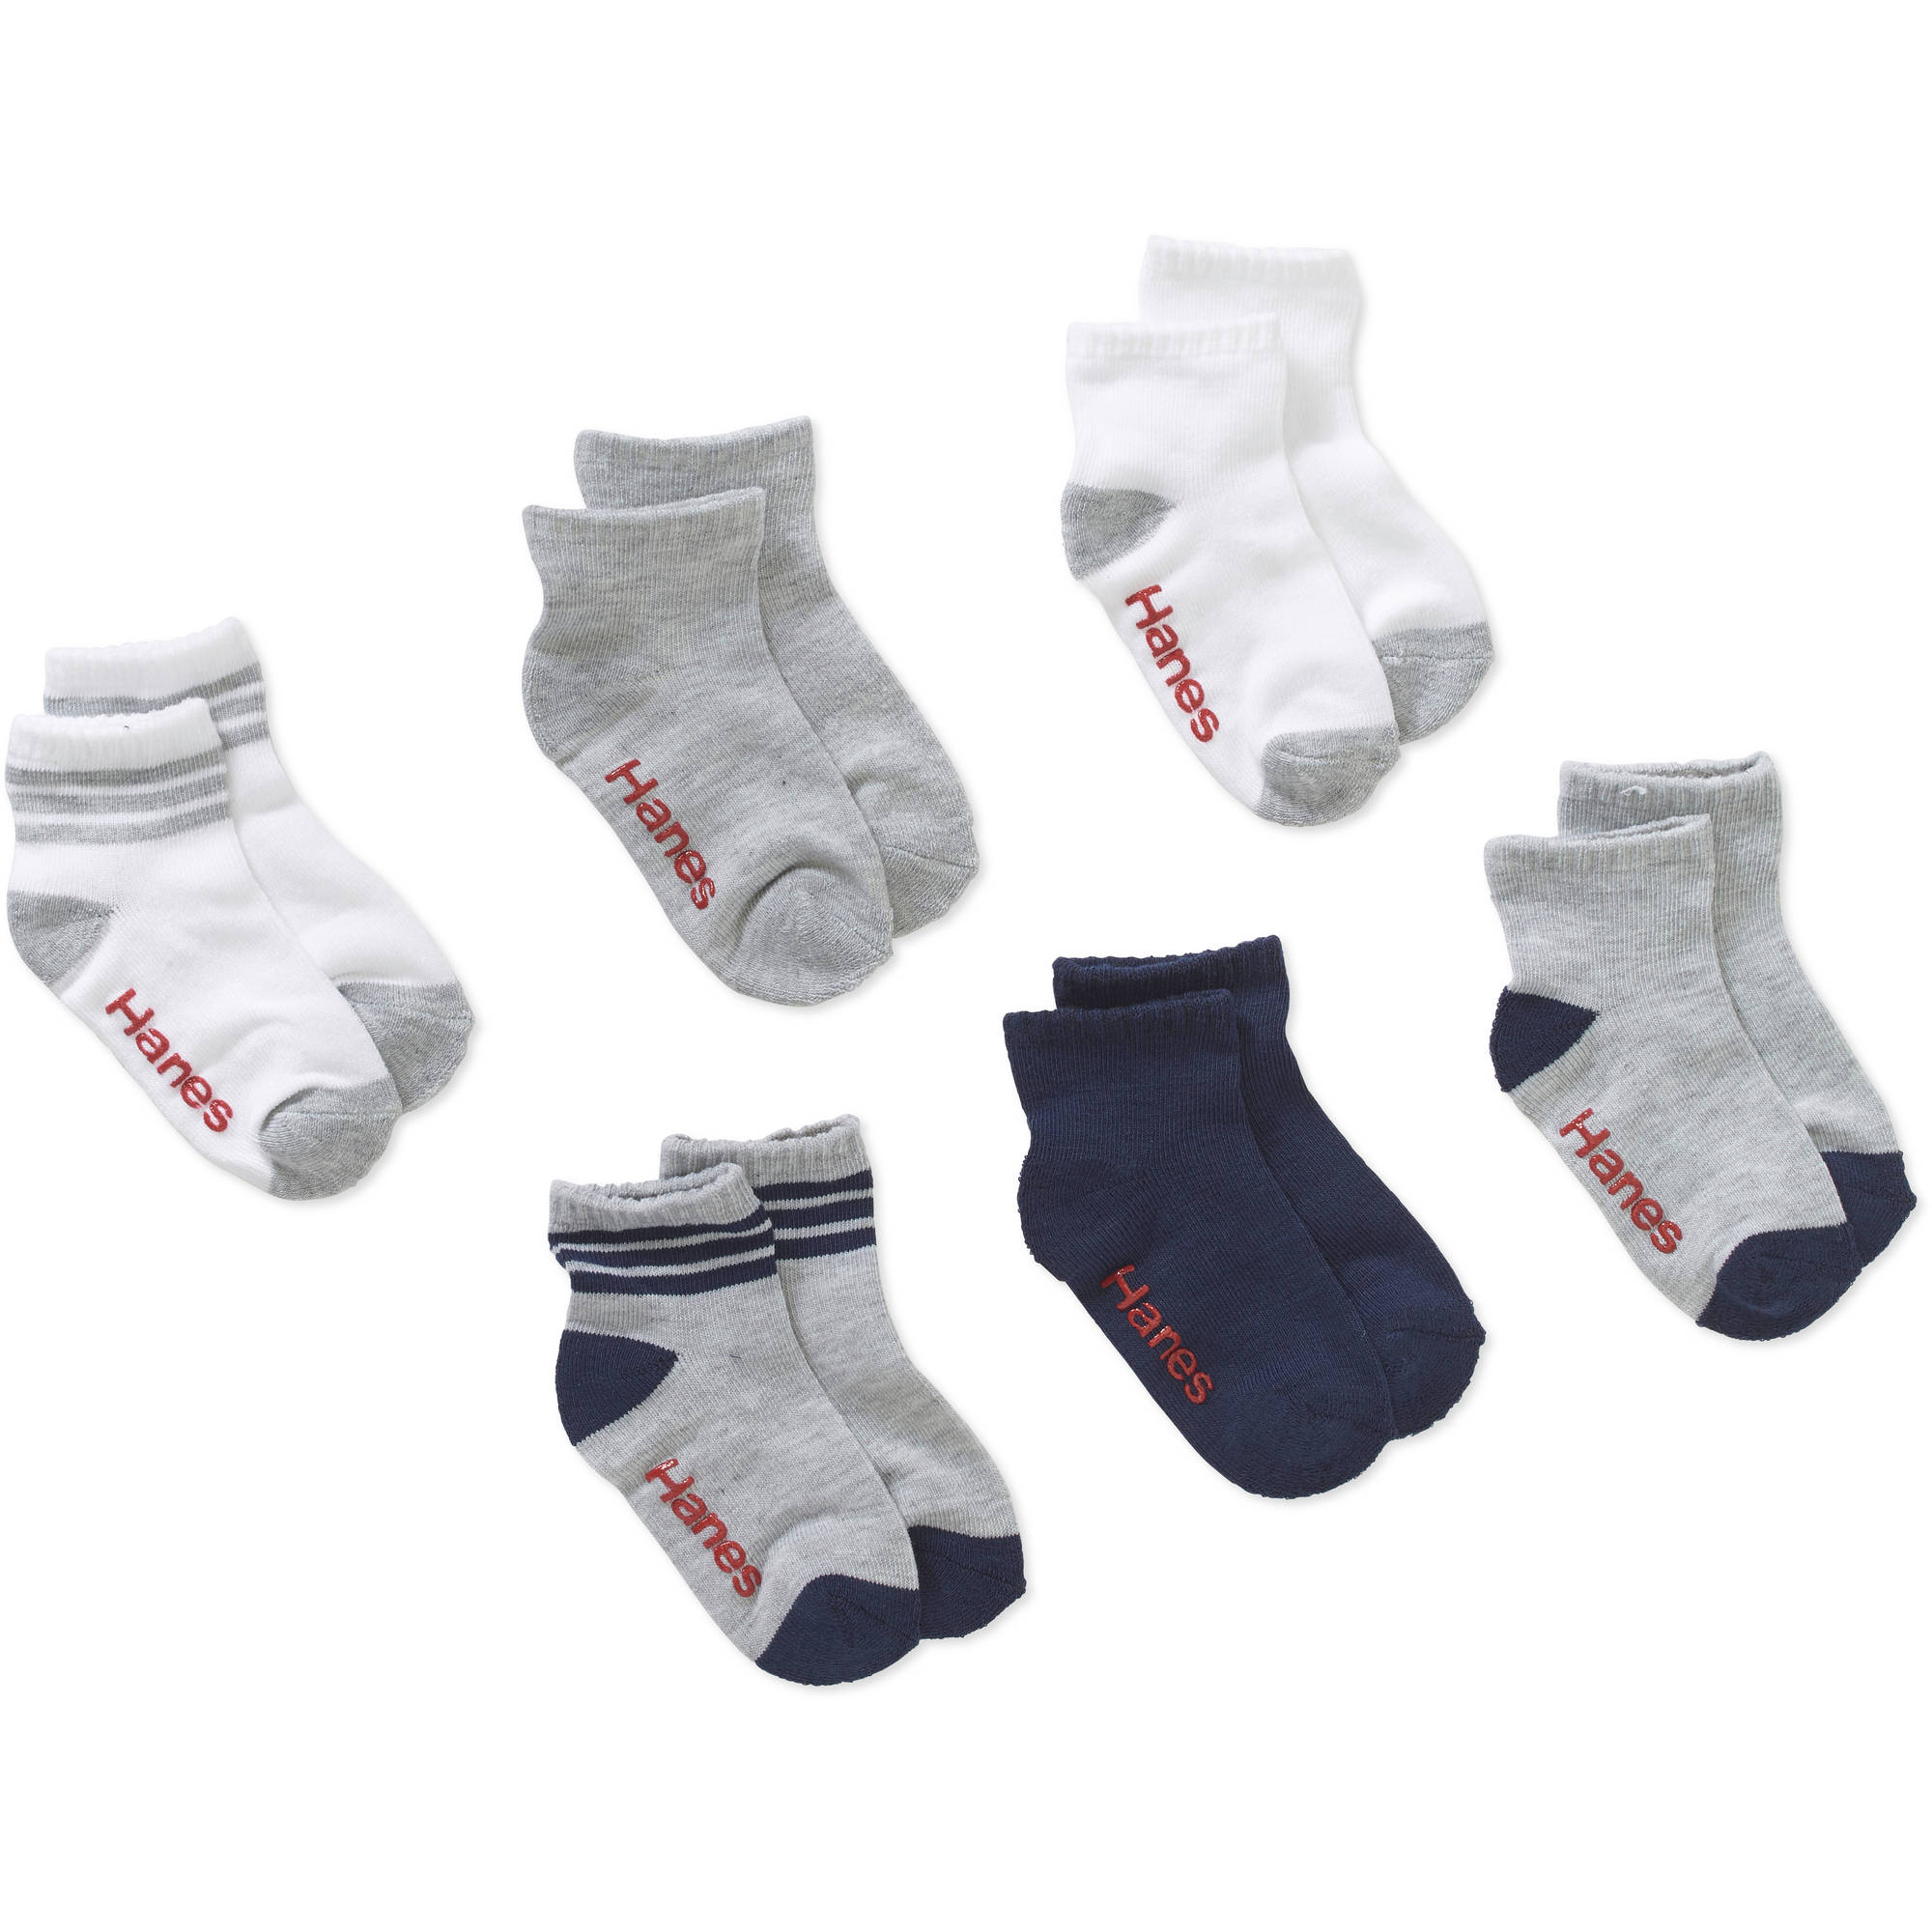 Hanes Toddler Boy Ankle Socks, 6 Pack, Sizes 6M-5T - image 1 of 3